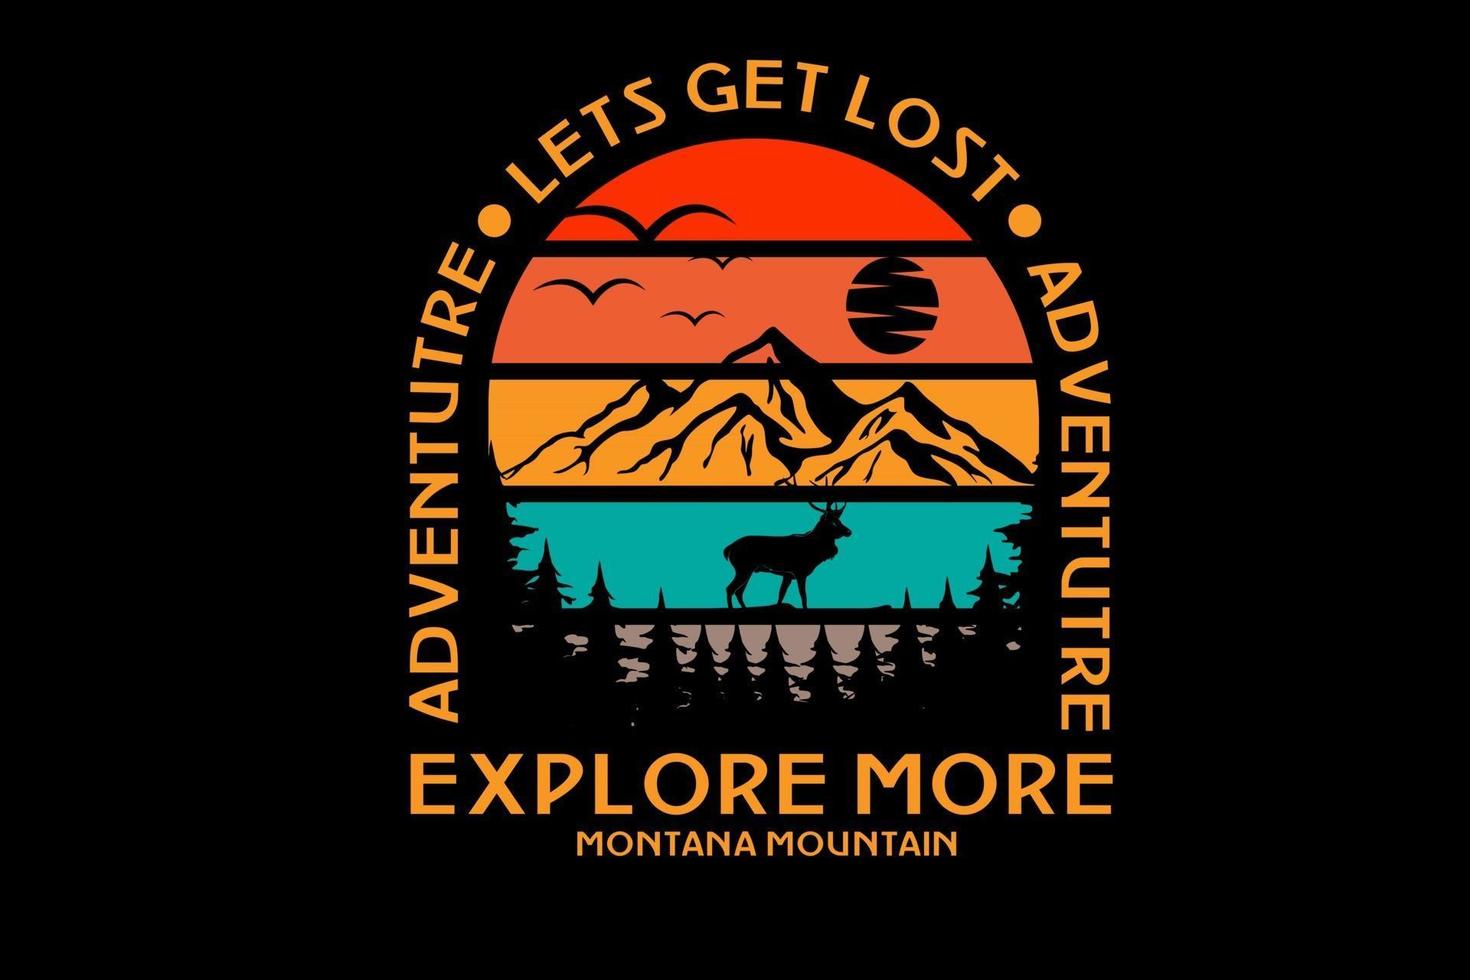 adventure explore more montana mountain color red orange and green vector